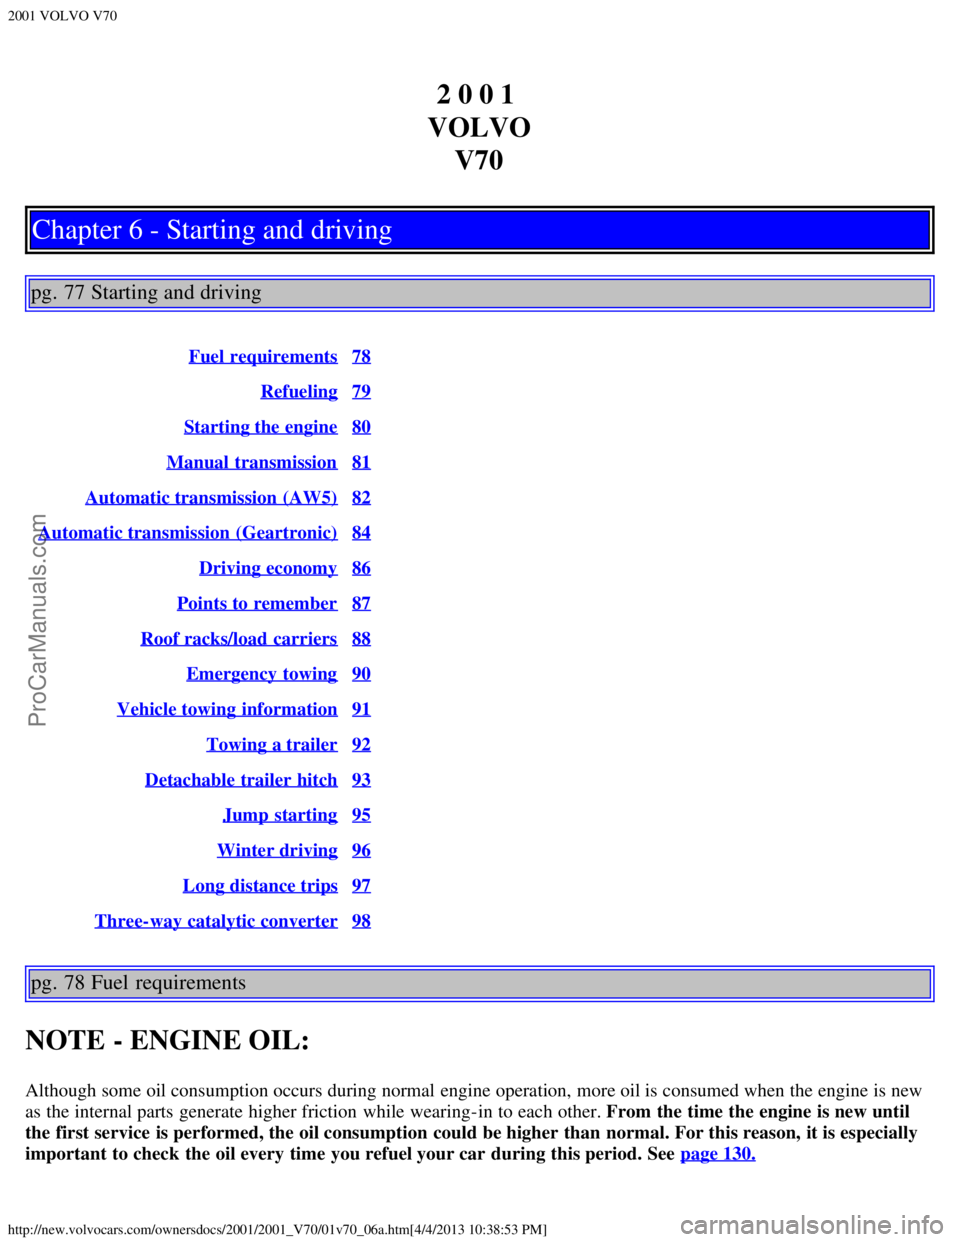 VOLVO V70 2001  Owners Manual 2001 VOLVO V70
http://new.volvocars.com/ownersdocs/2001/2001_V70/01v70_06a.htm[4/4/2013 10:38:53 PM]
2 0 0 1 
VOLVO V70
Chapter 6 - Starting and driving
pg. 77 Starting and driving
Fuel requirements78